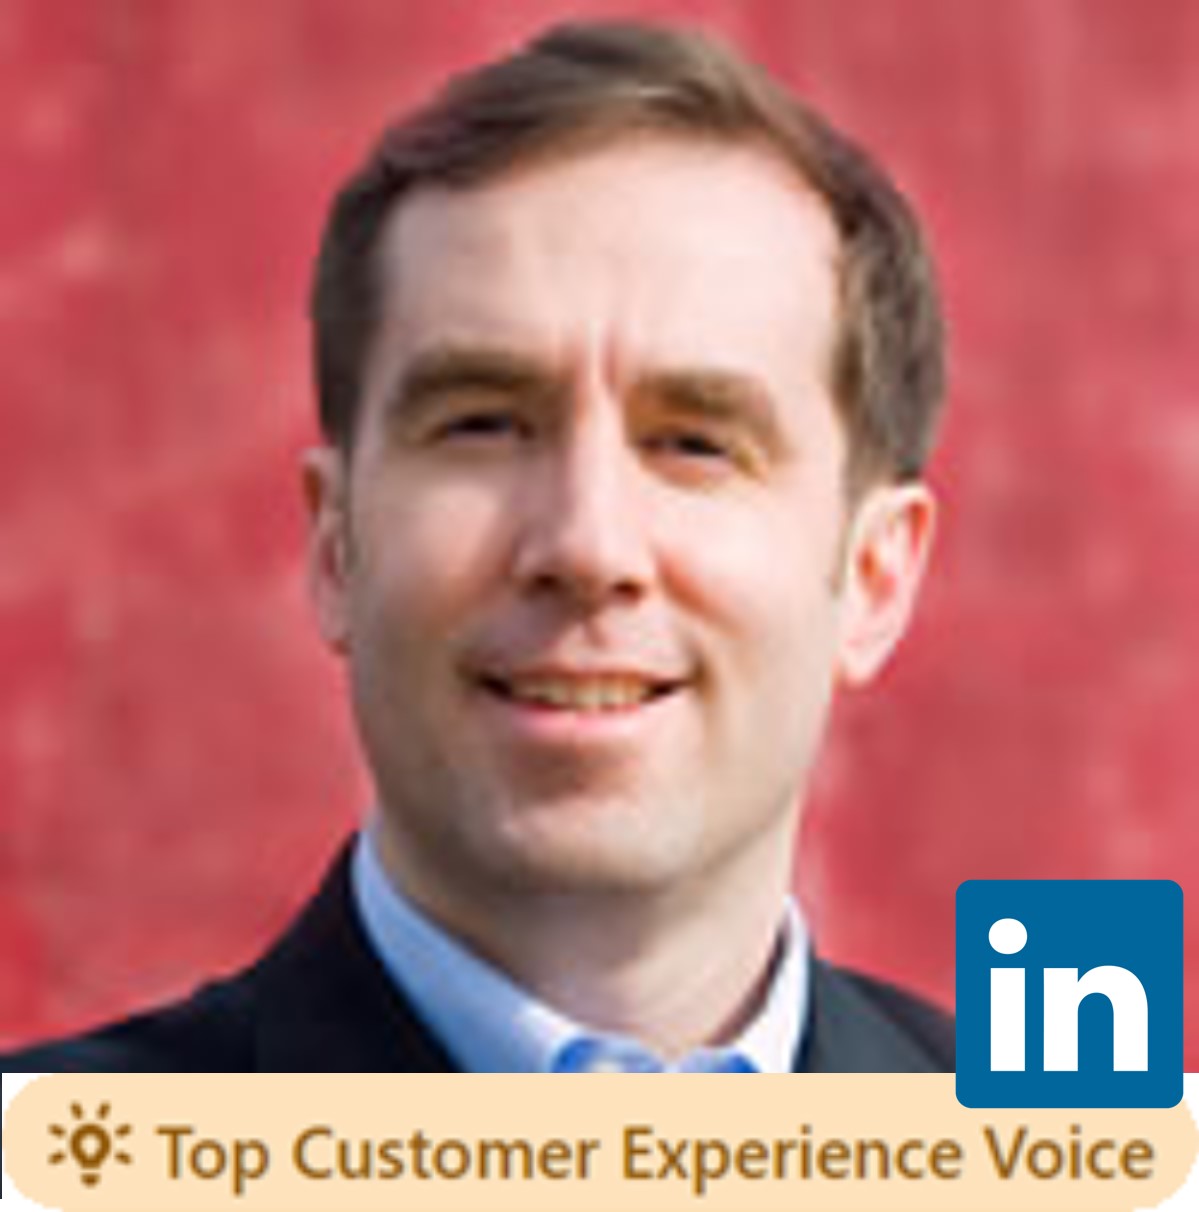 Braden Kelley - LinkedIn Top Customer Experience Voice